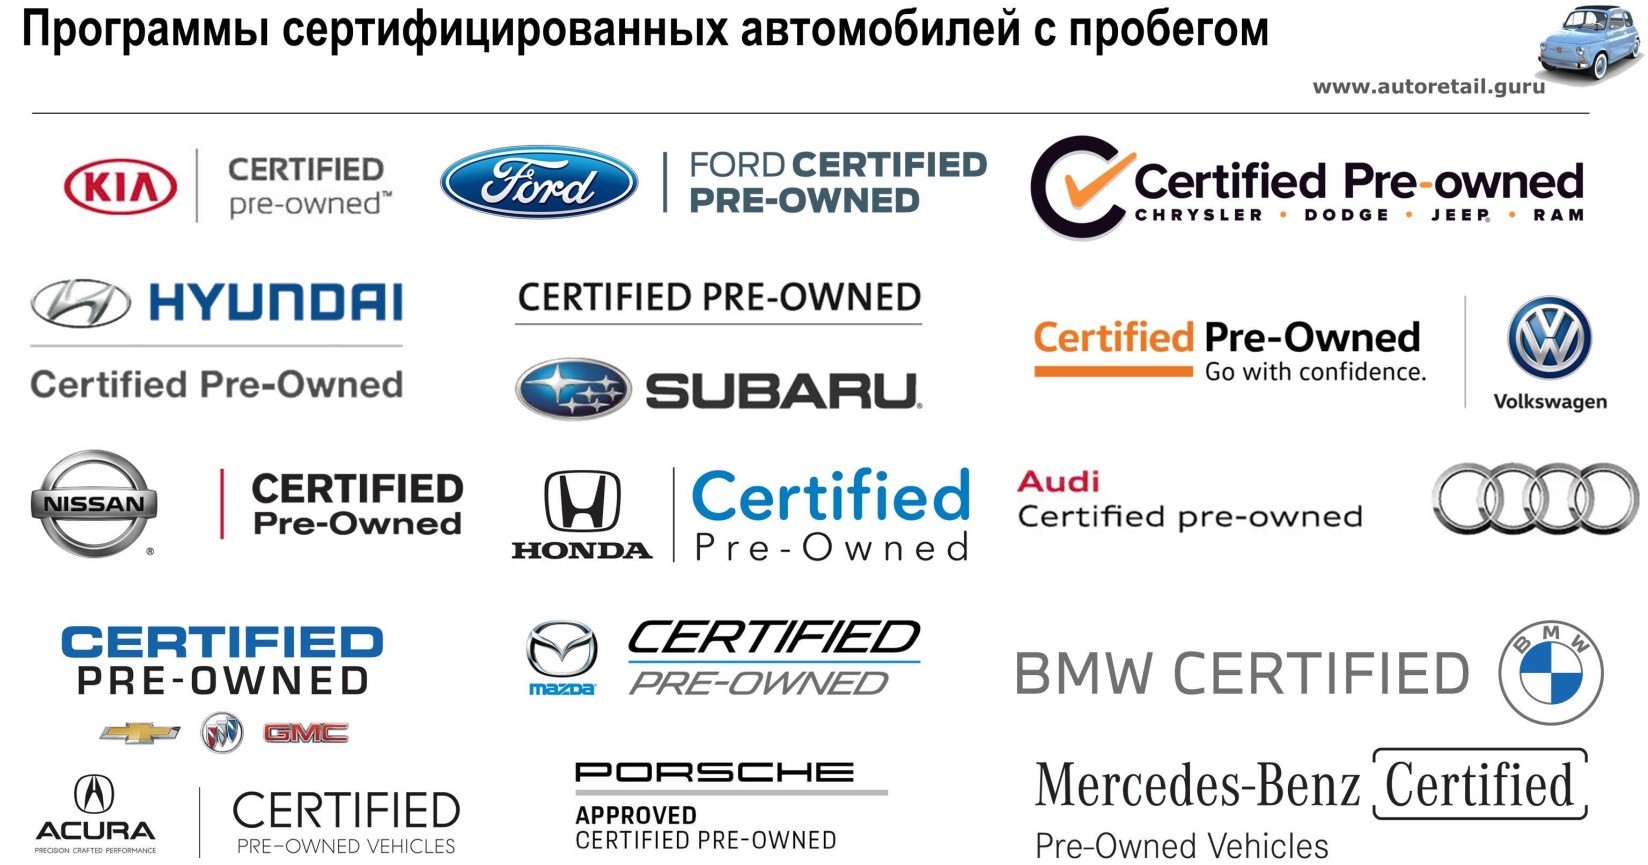 Honda Certified Used Vehicle (CPO) Program